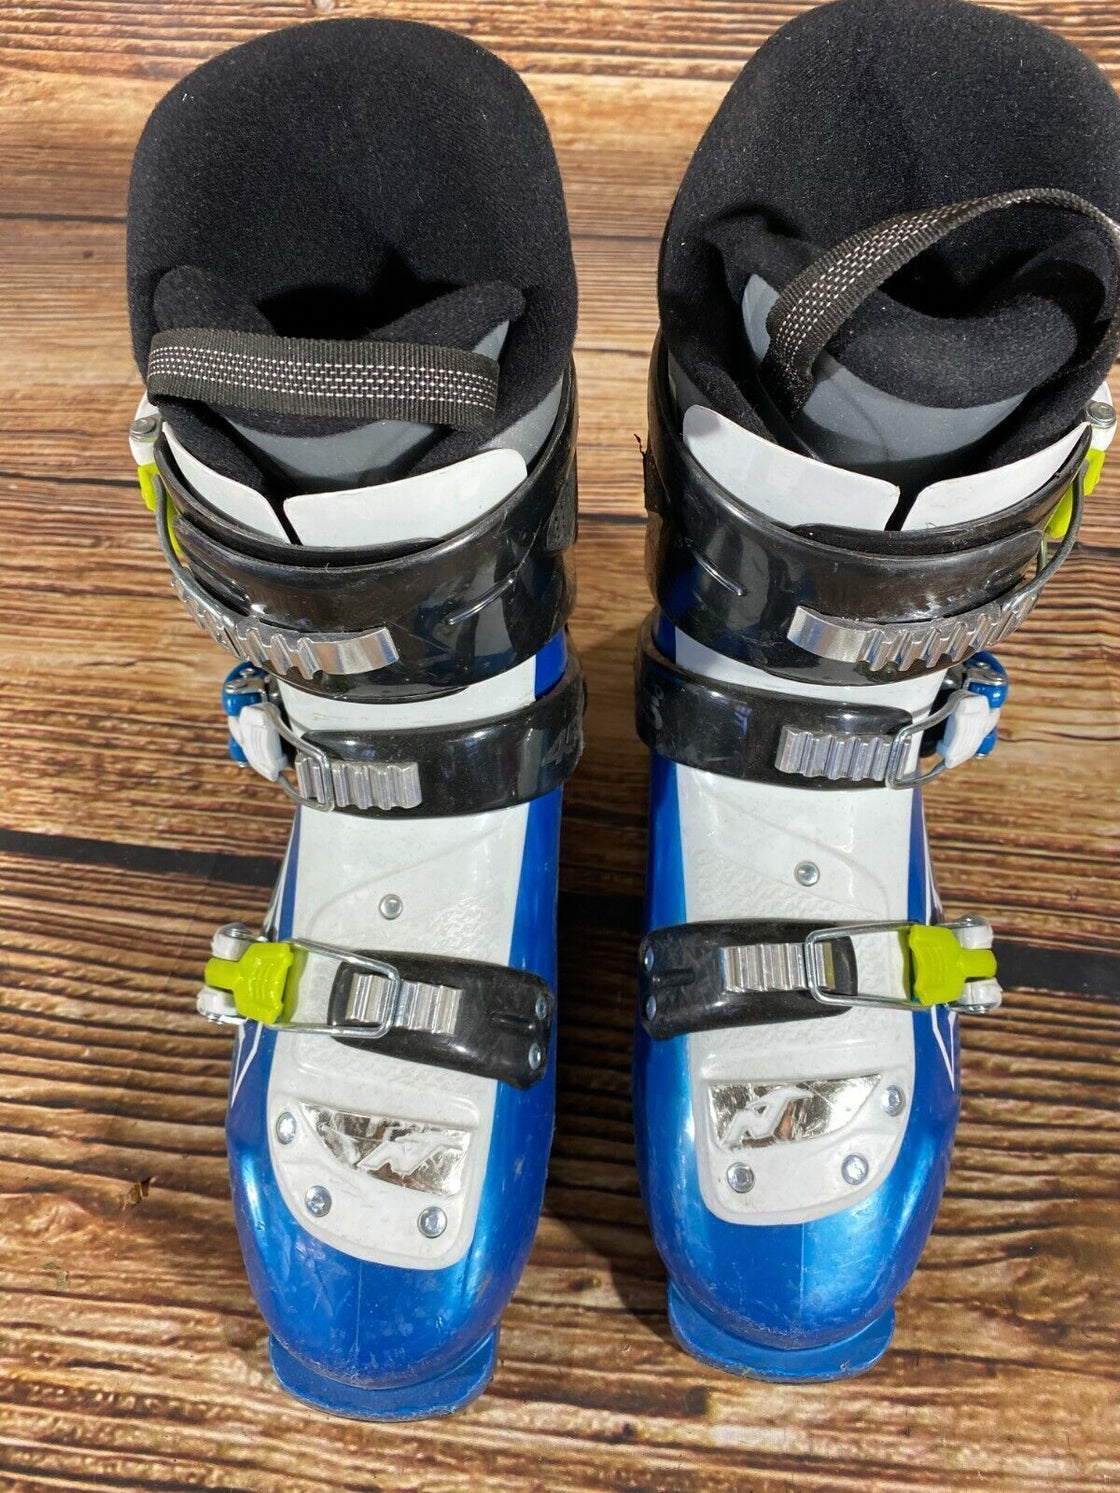 NORDICA Firearrow Alpine Ski Boots Mountain Skiing Boots Size 255 - 265